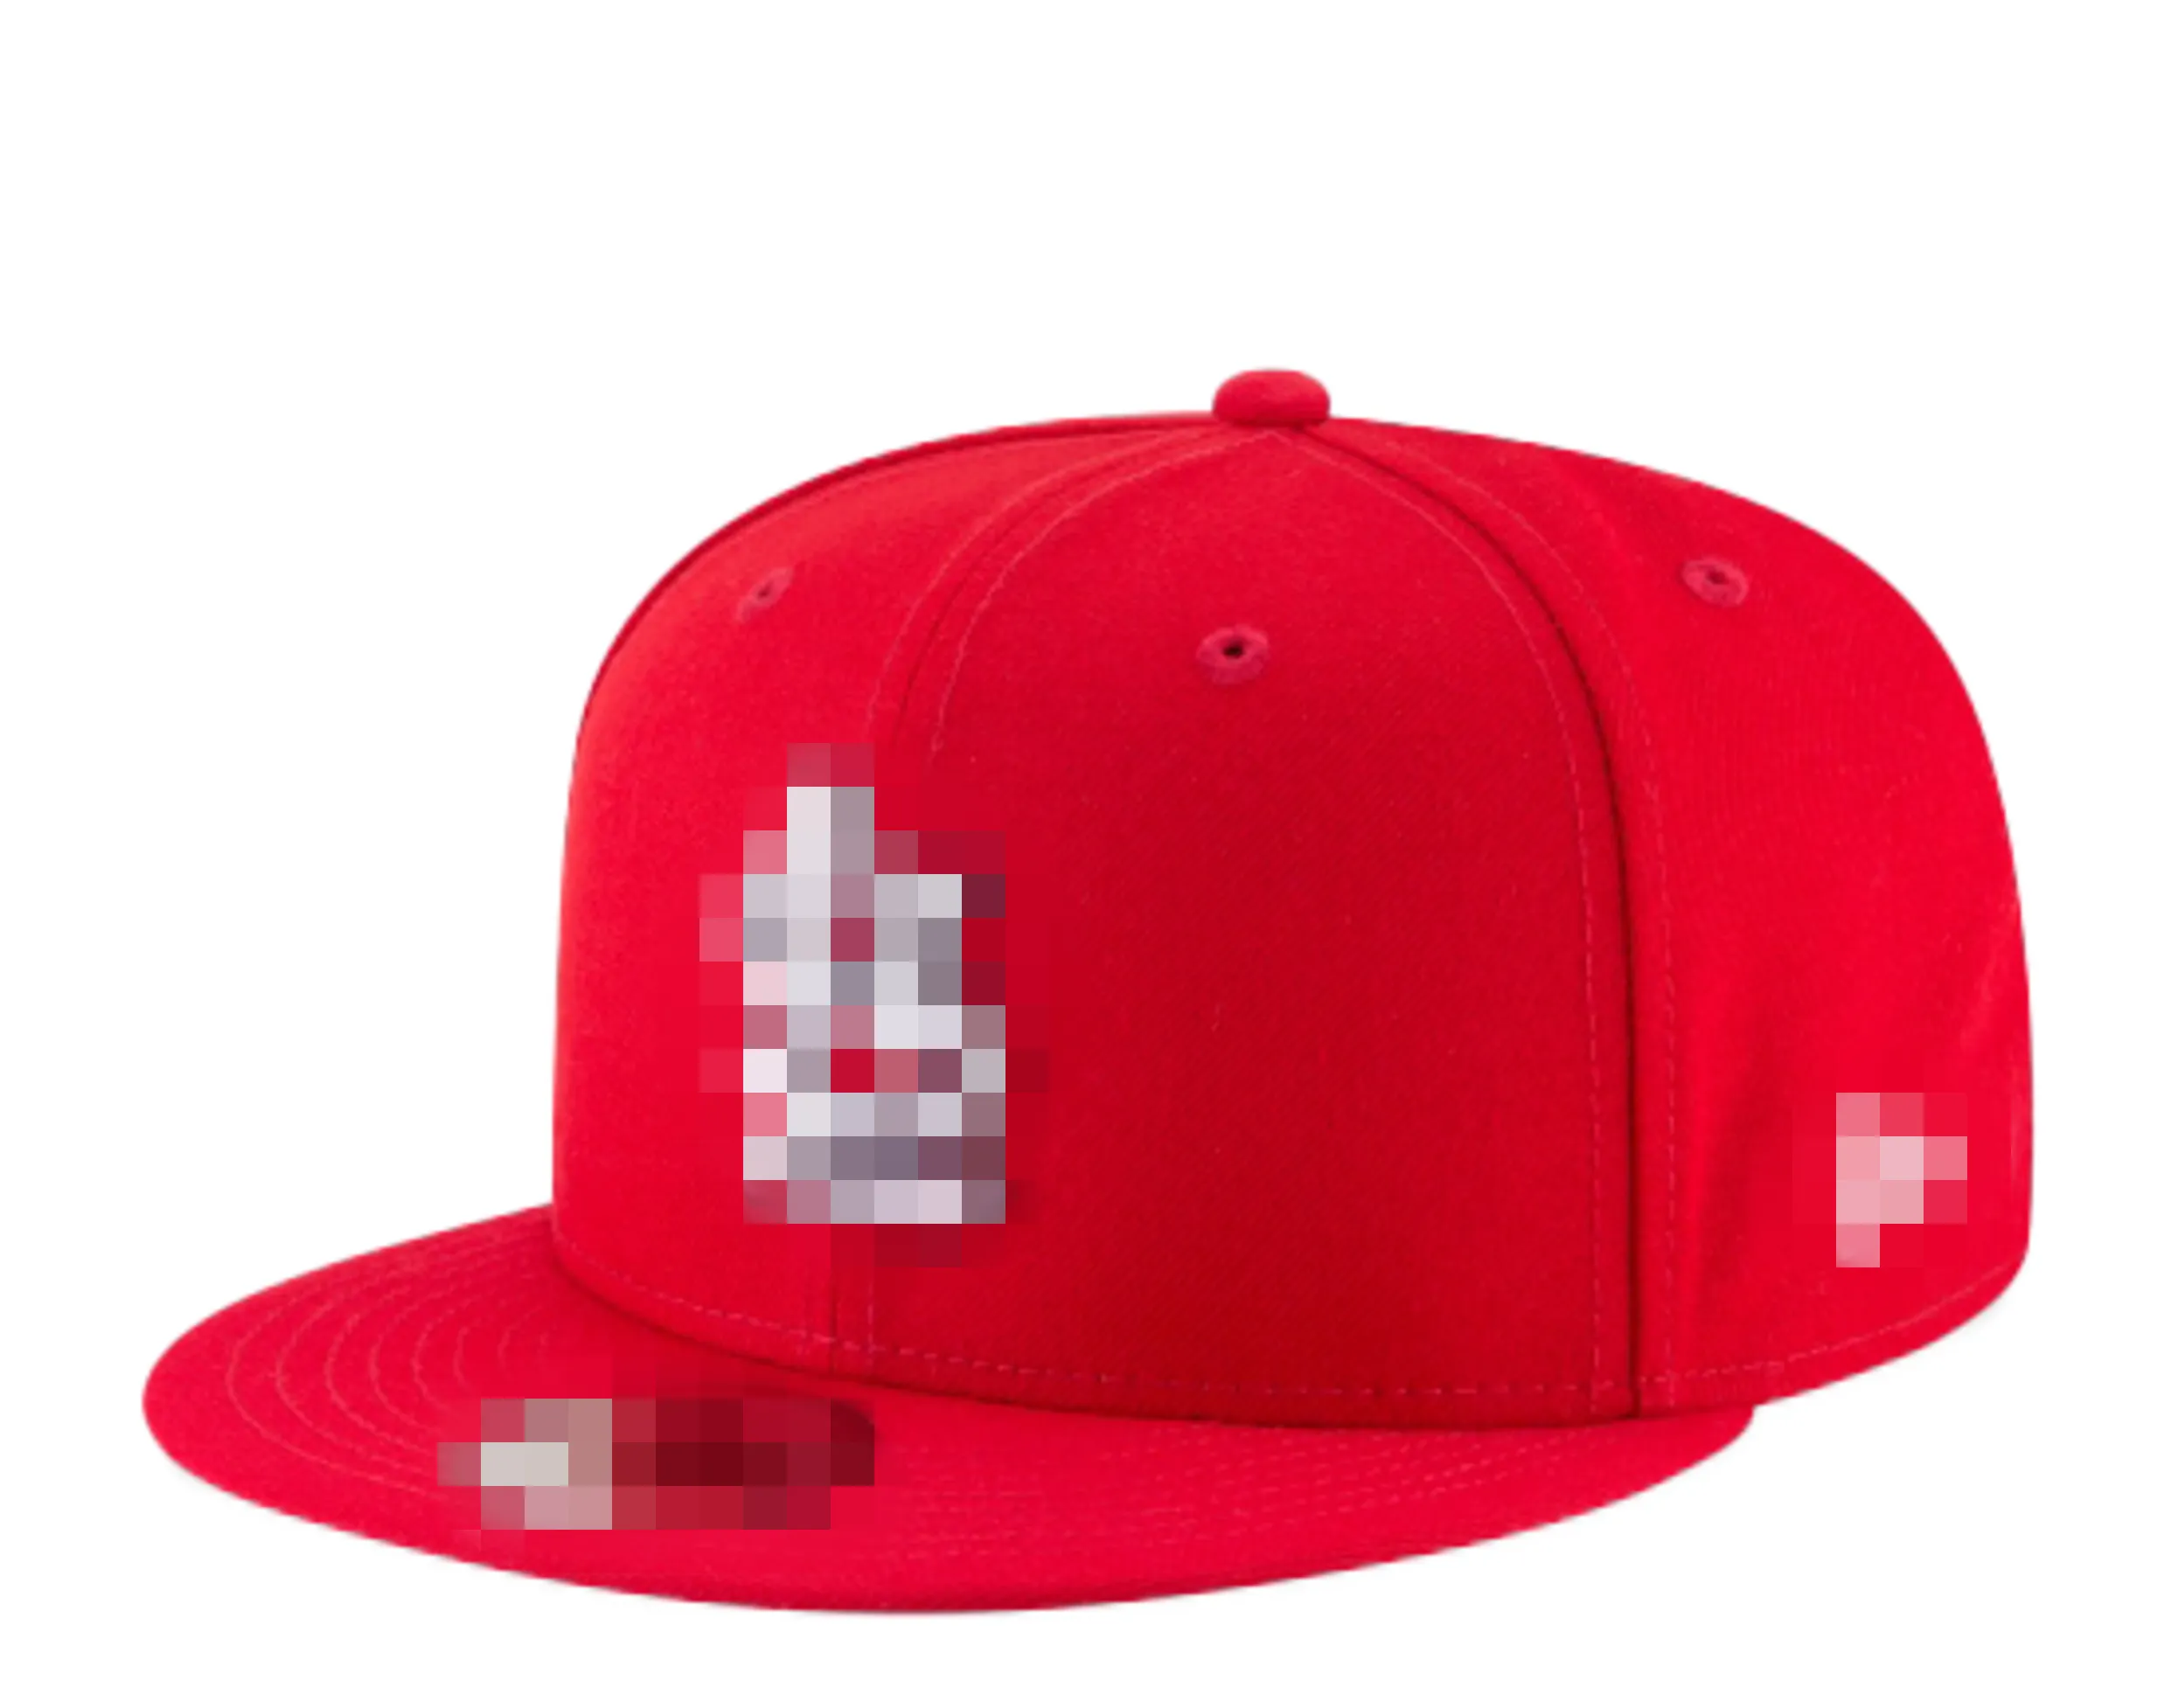 STL letter baseaball caps snapback hats for men women sport hip hop womens bone sun cap man H23